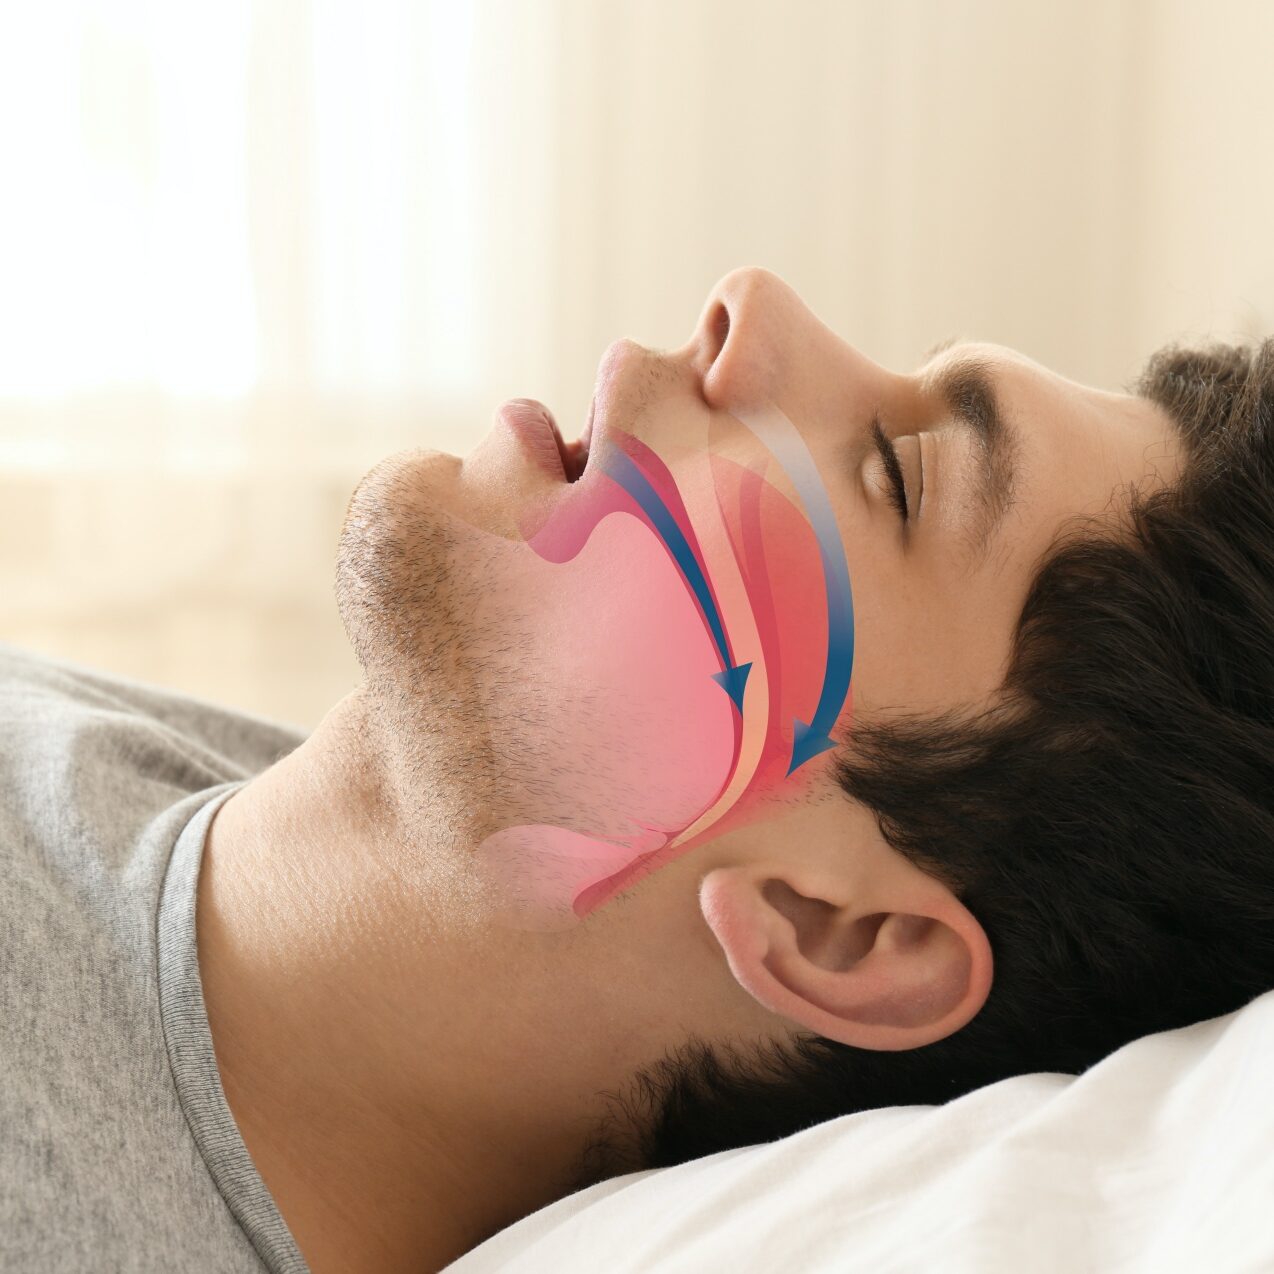 A man with sleep apnea disorder